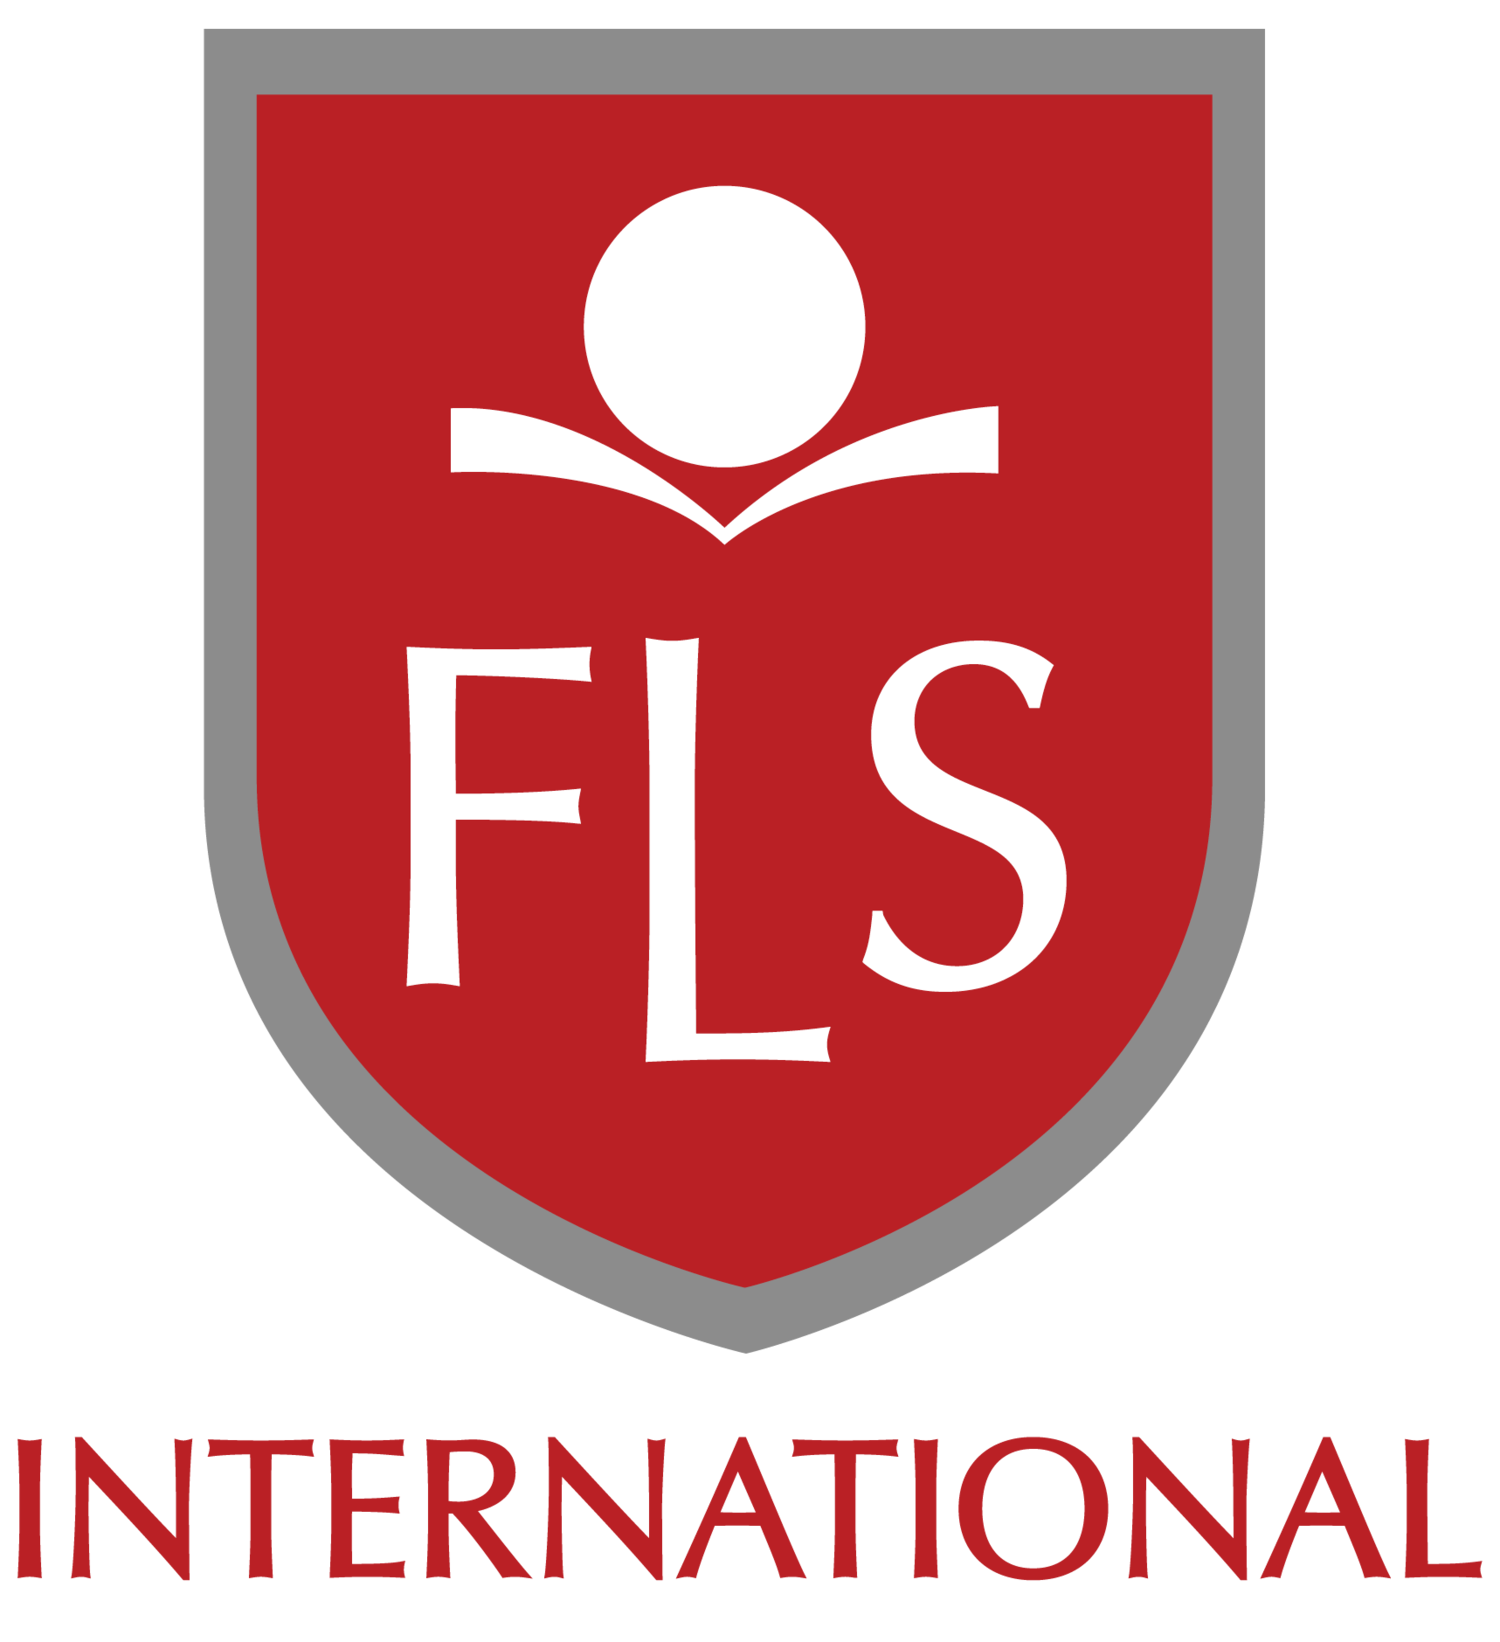 TOEFL/SAT @ THE NEWMAN SCHOOL — FLS International